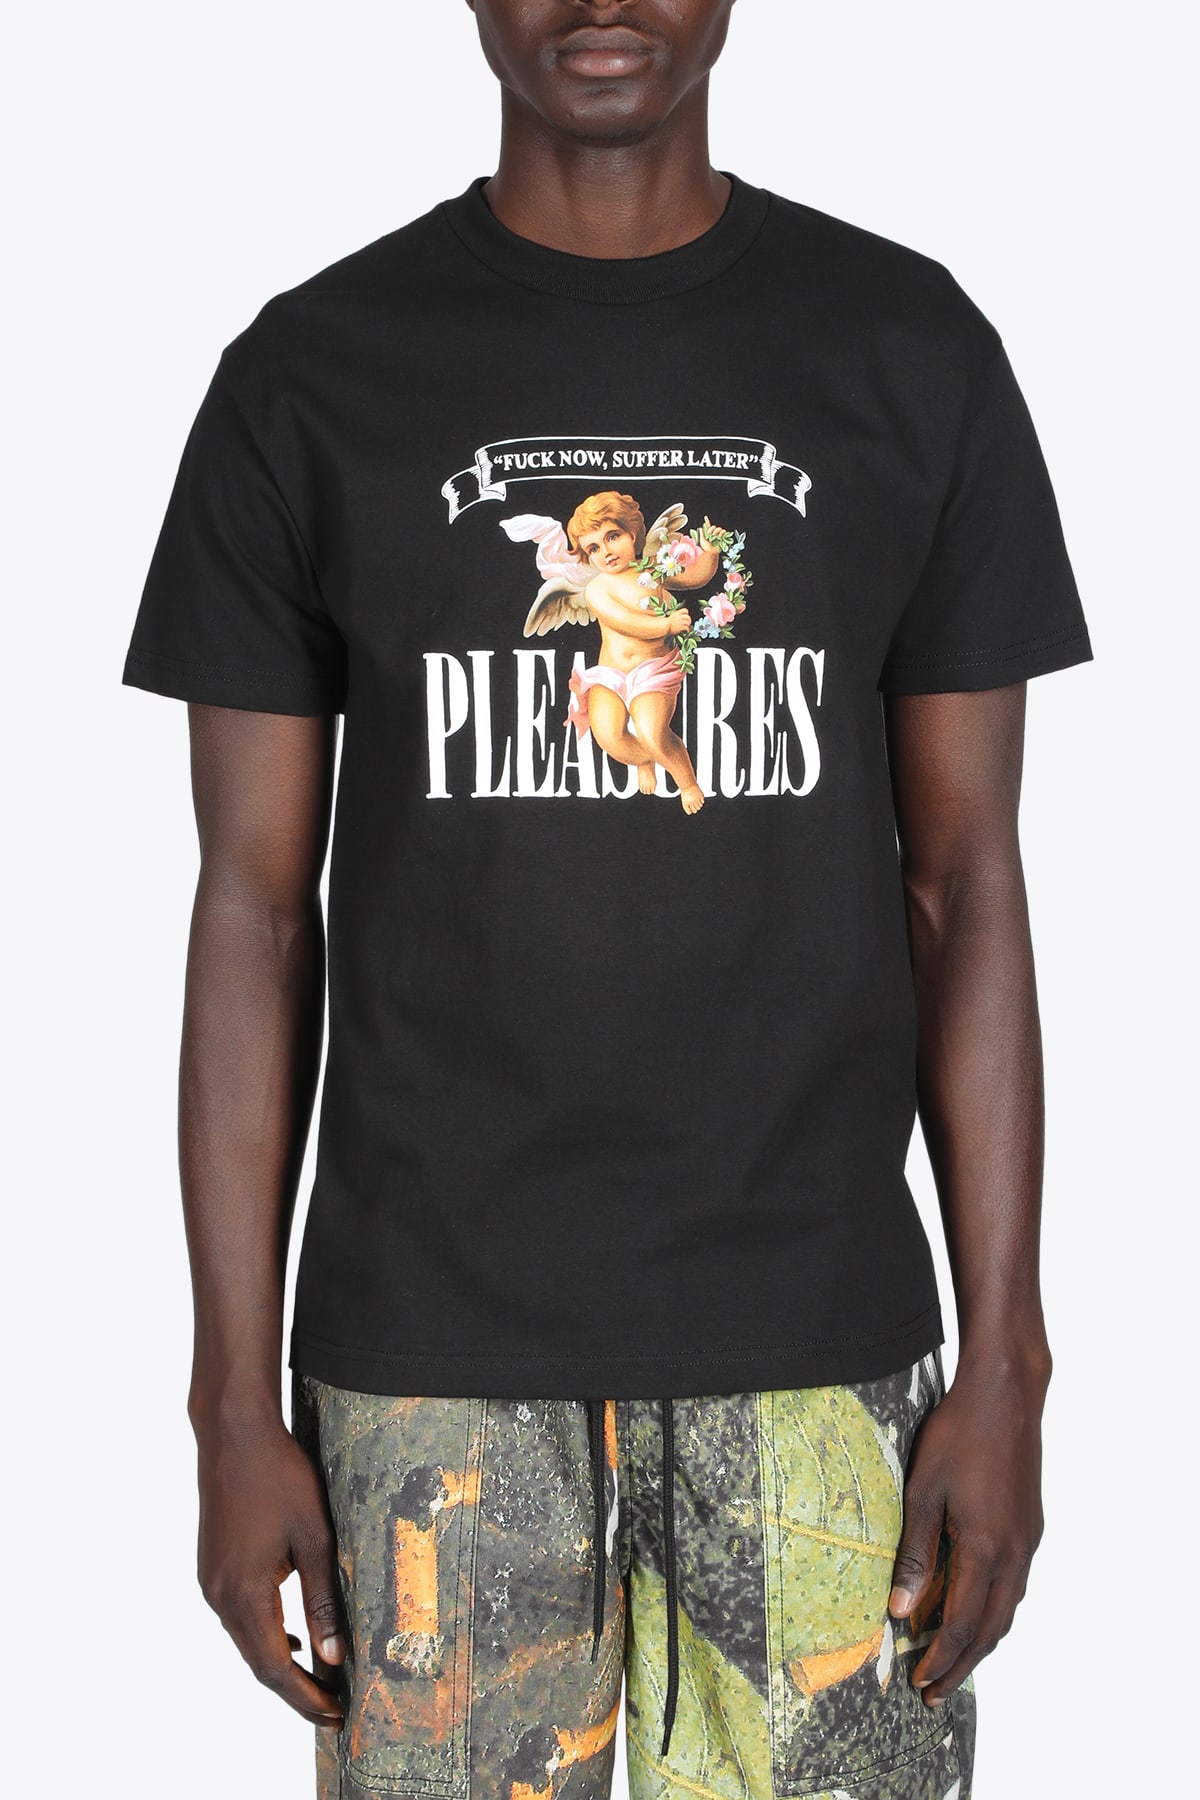 Pleasures Suffer T-shirt